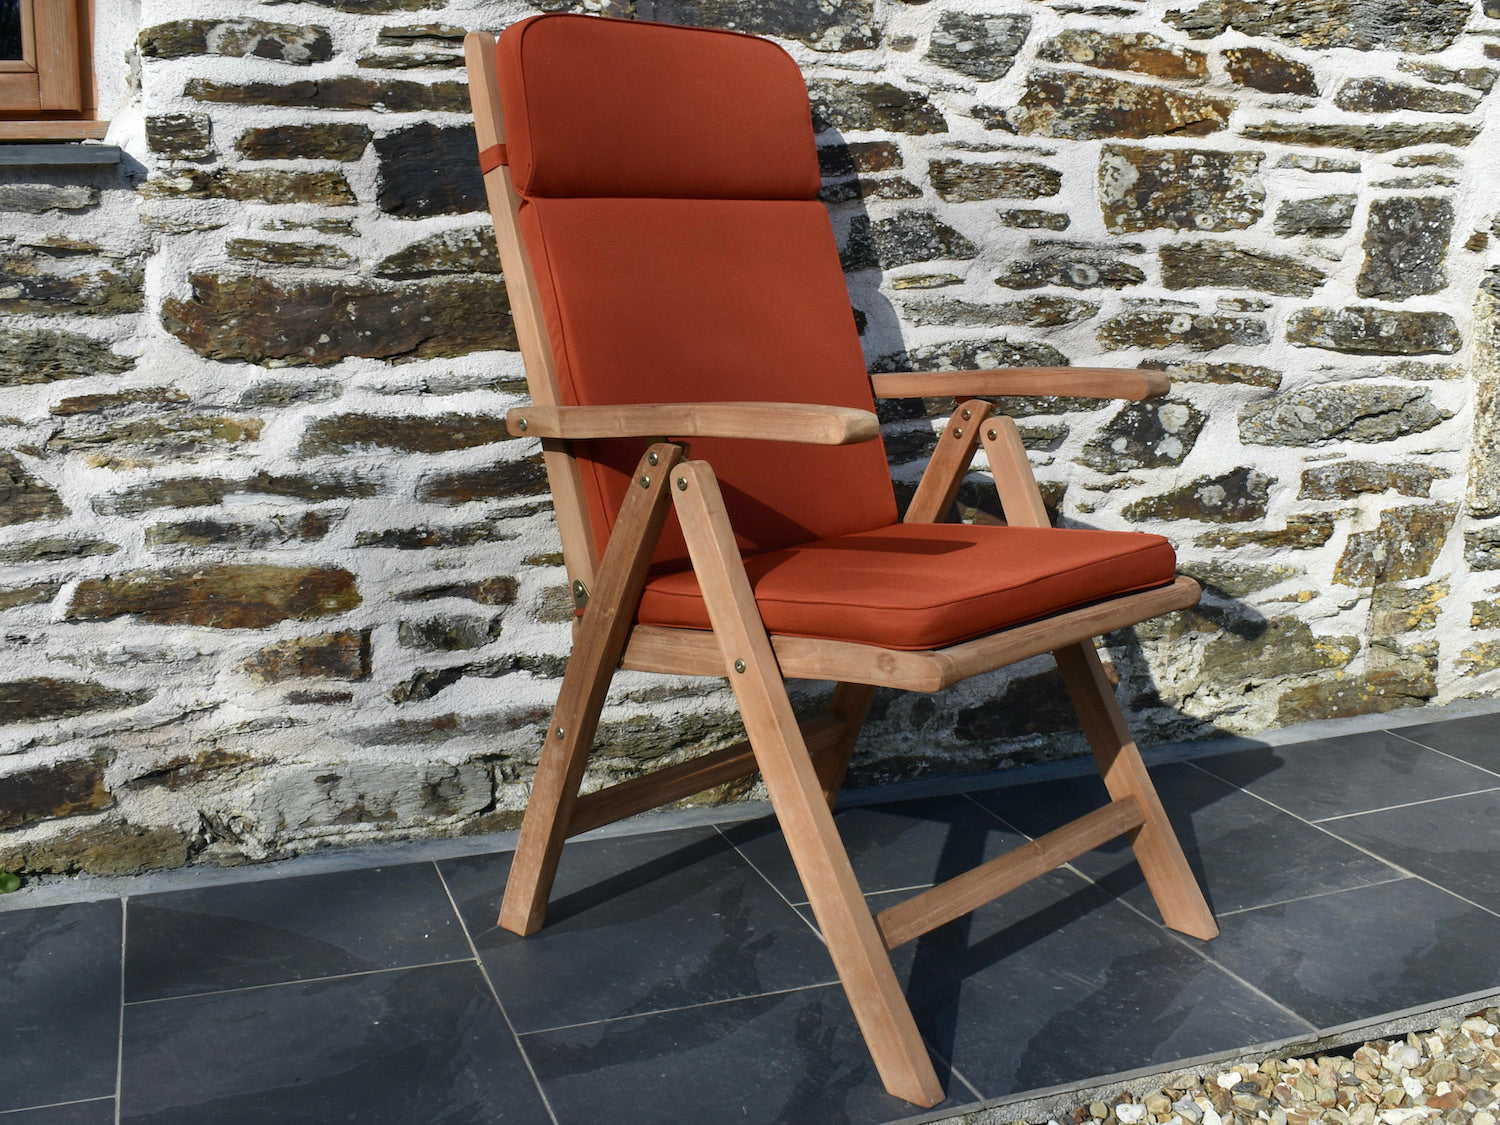 terracotta orange colour outdoor cushion for a garden recliner chair